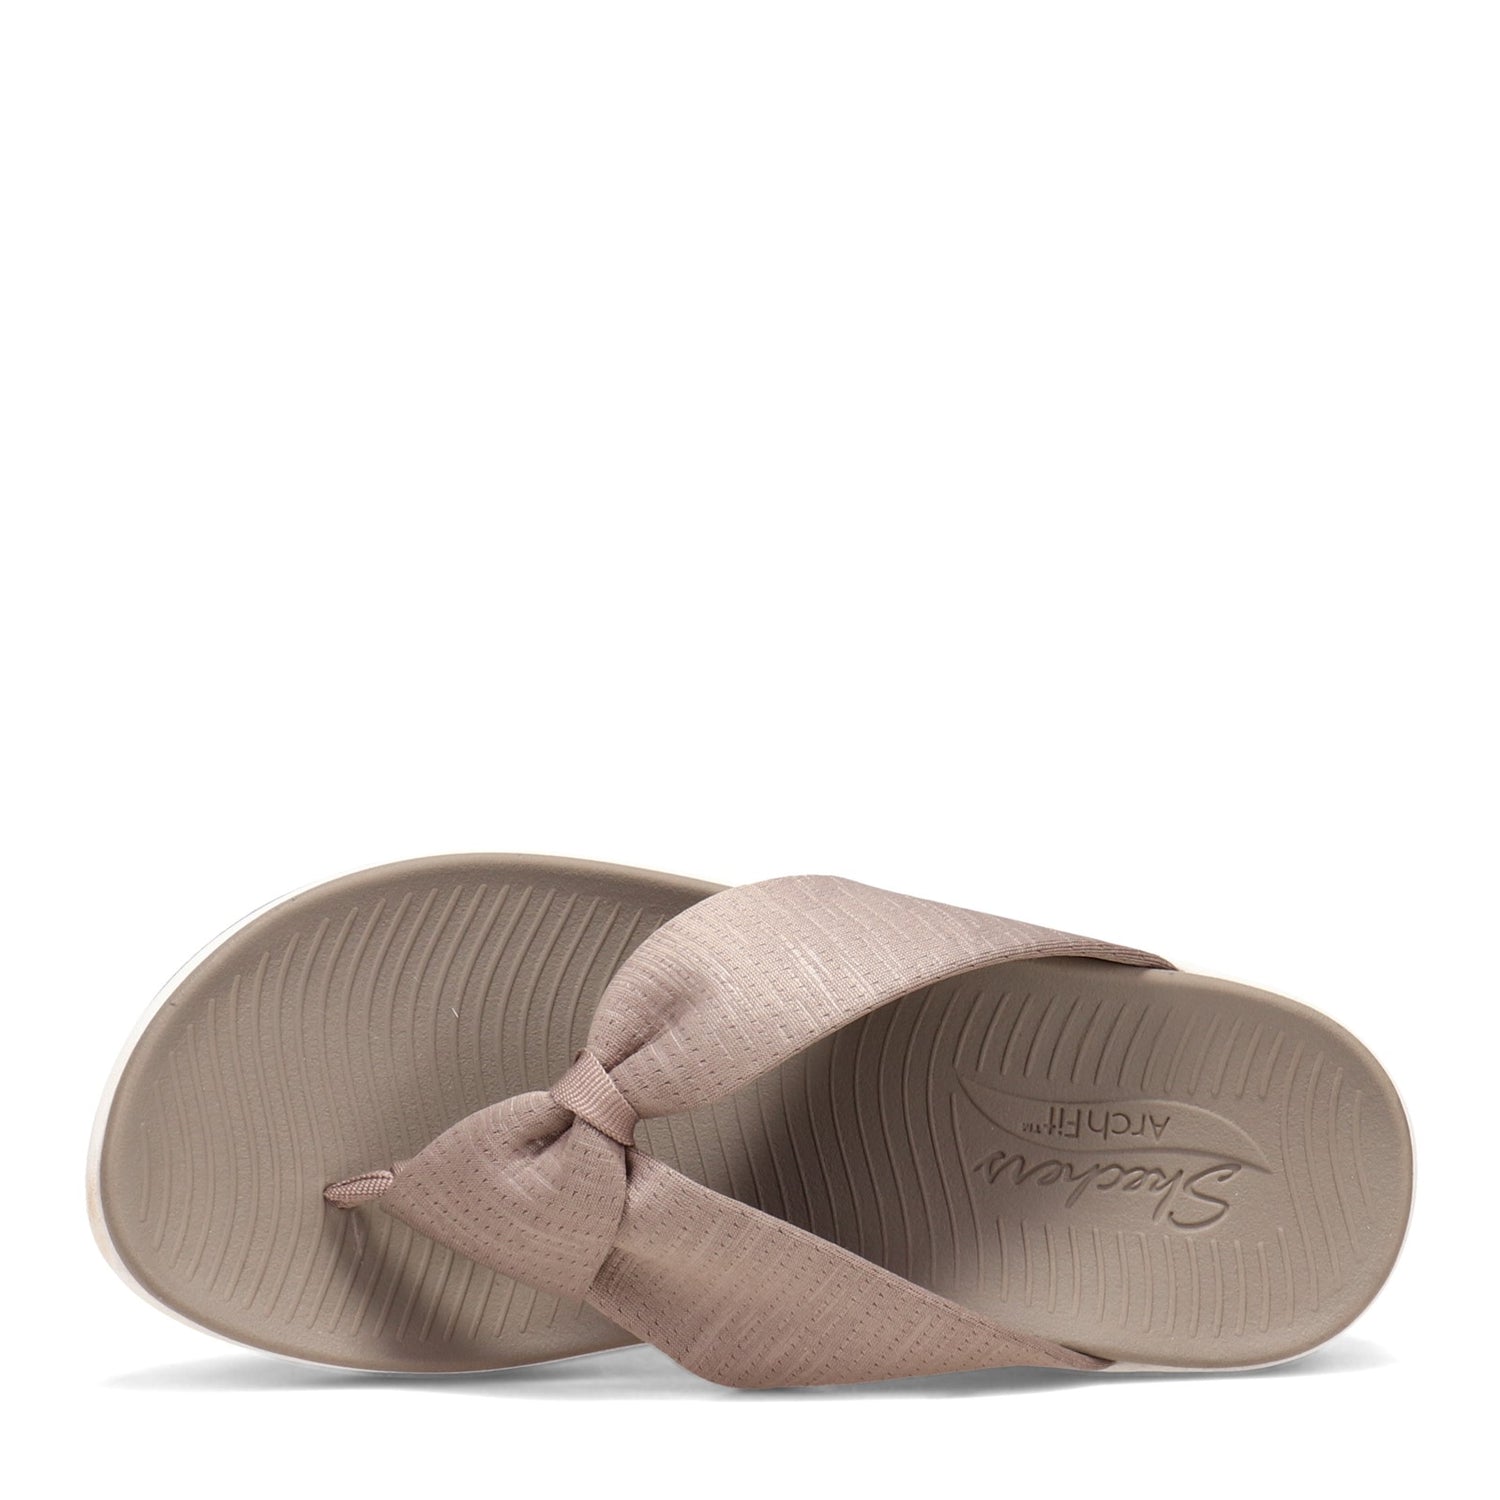 Peltz Shoes  Women's Skechers Arch Fit Sunshine - My Life Sandal Dark Taupe 163312-DKTP